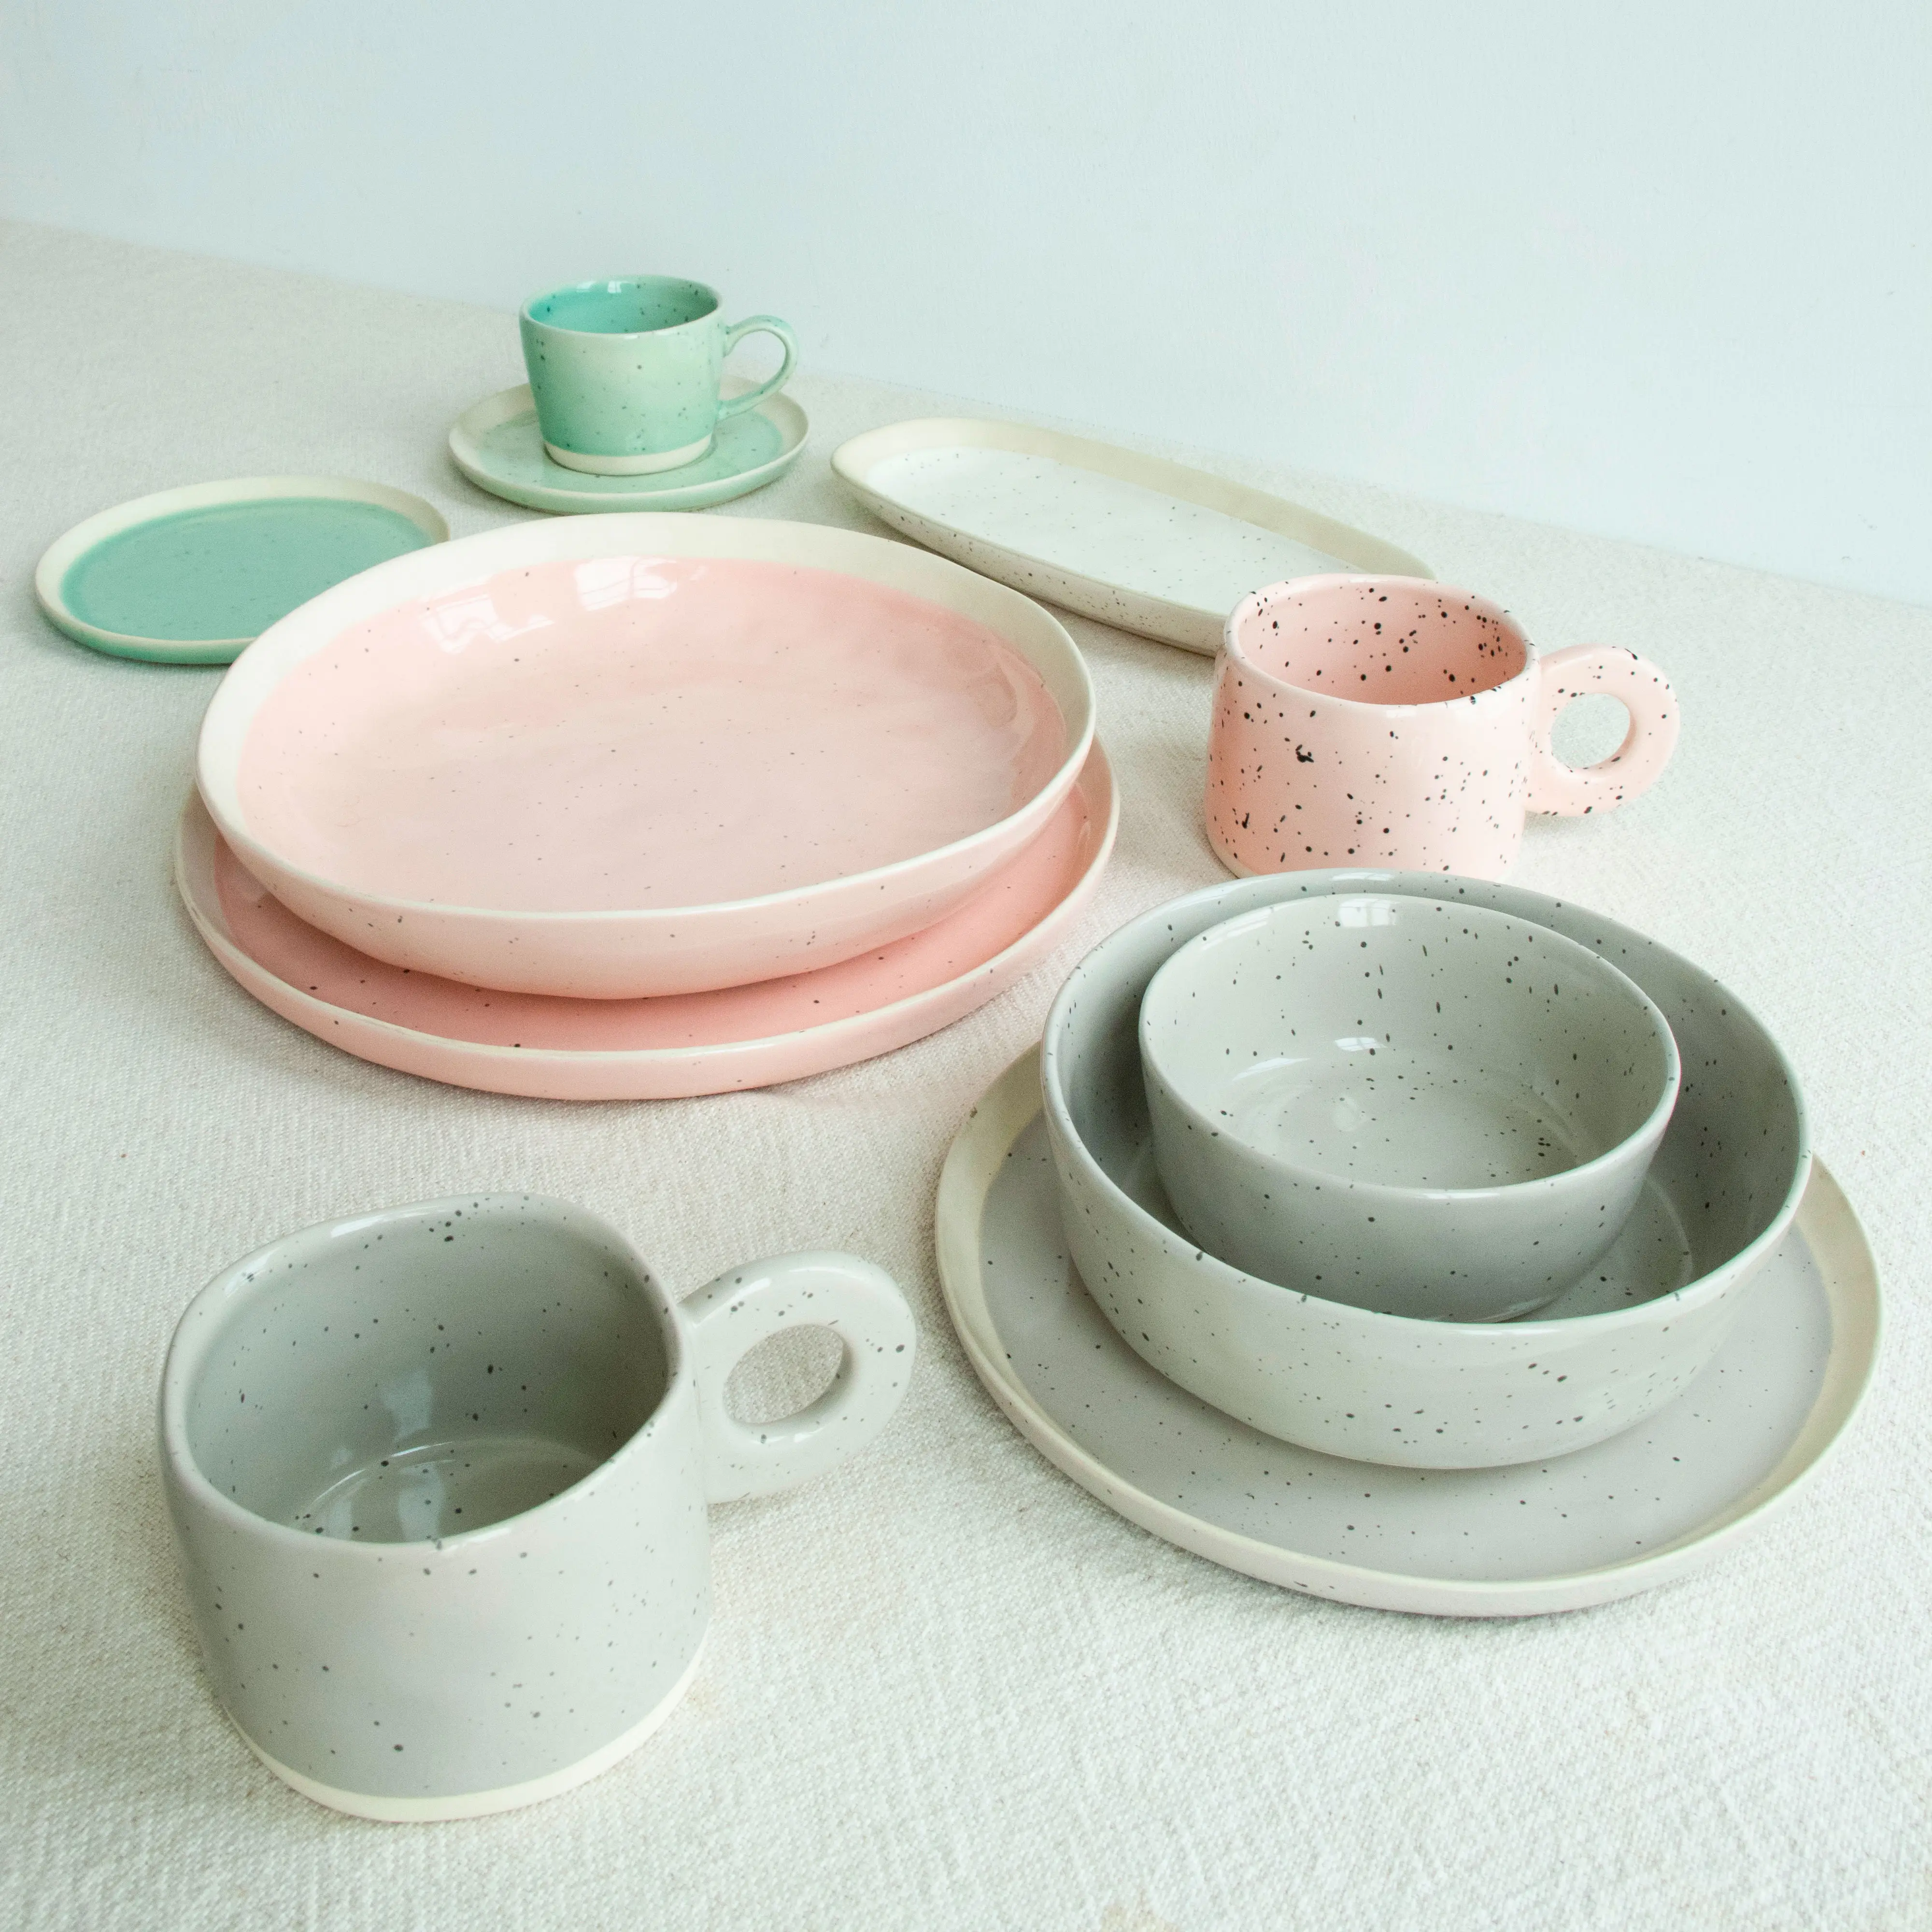 Joyye High Quality Customize Ceramic Plates and Bowls Dinner Set Tableware Plates Porcelain Ceramic Dinnerware